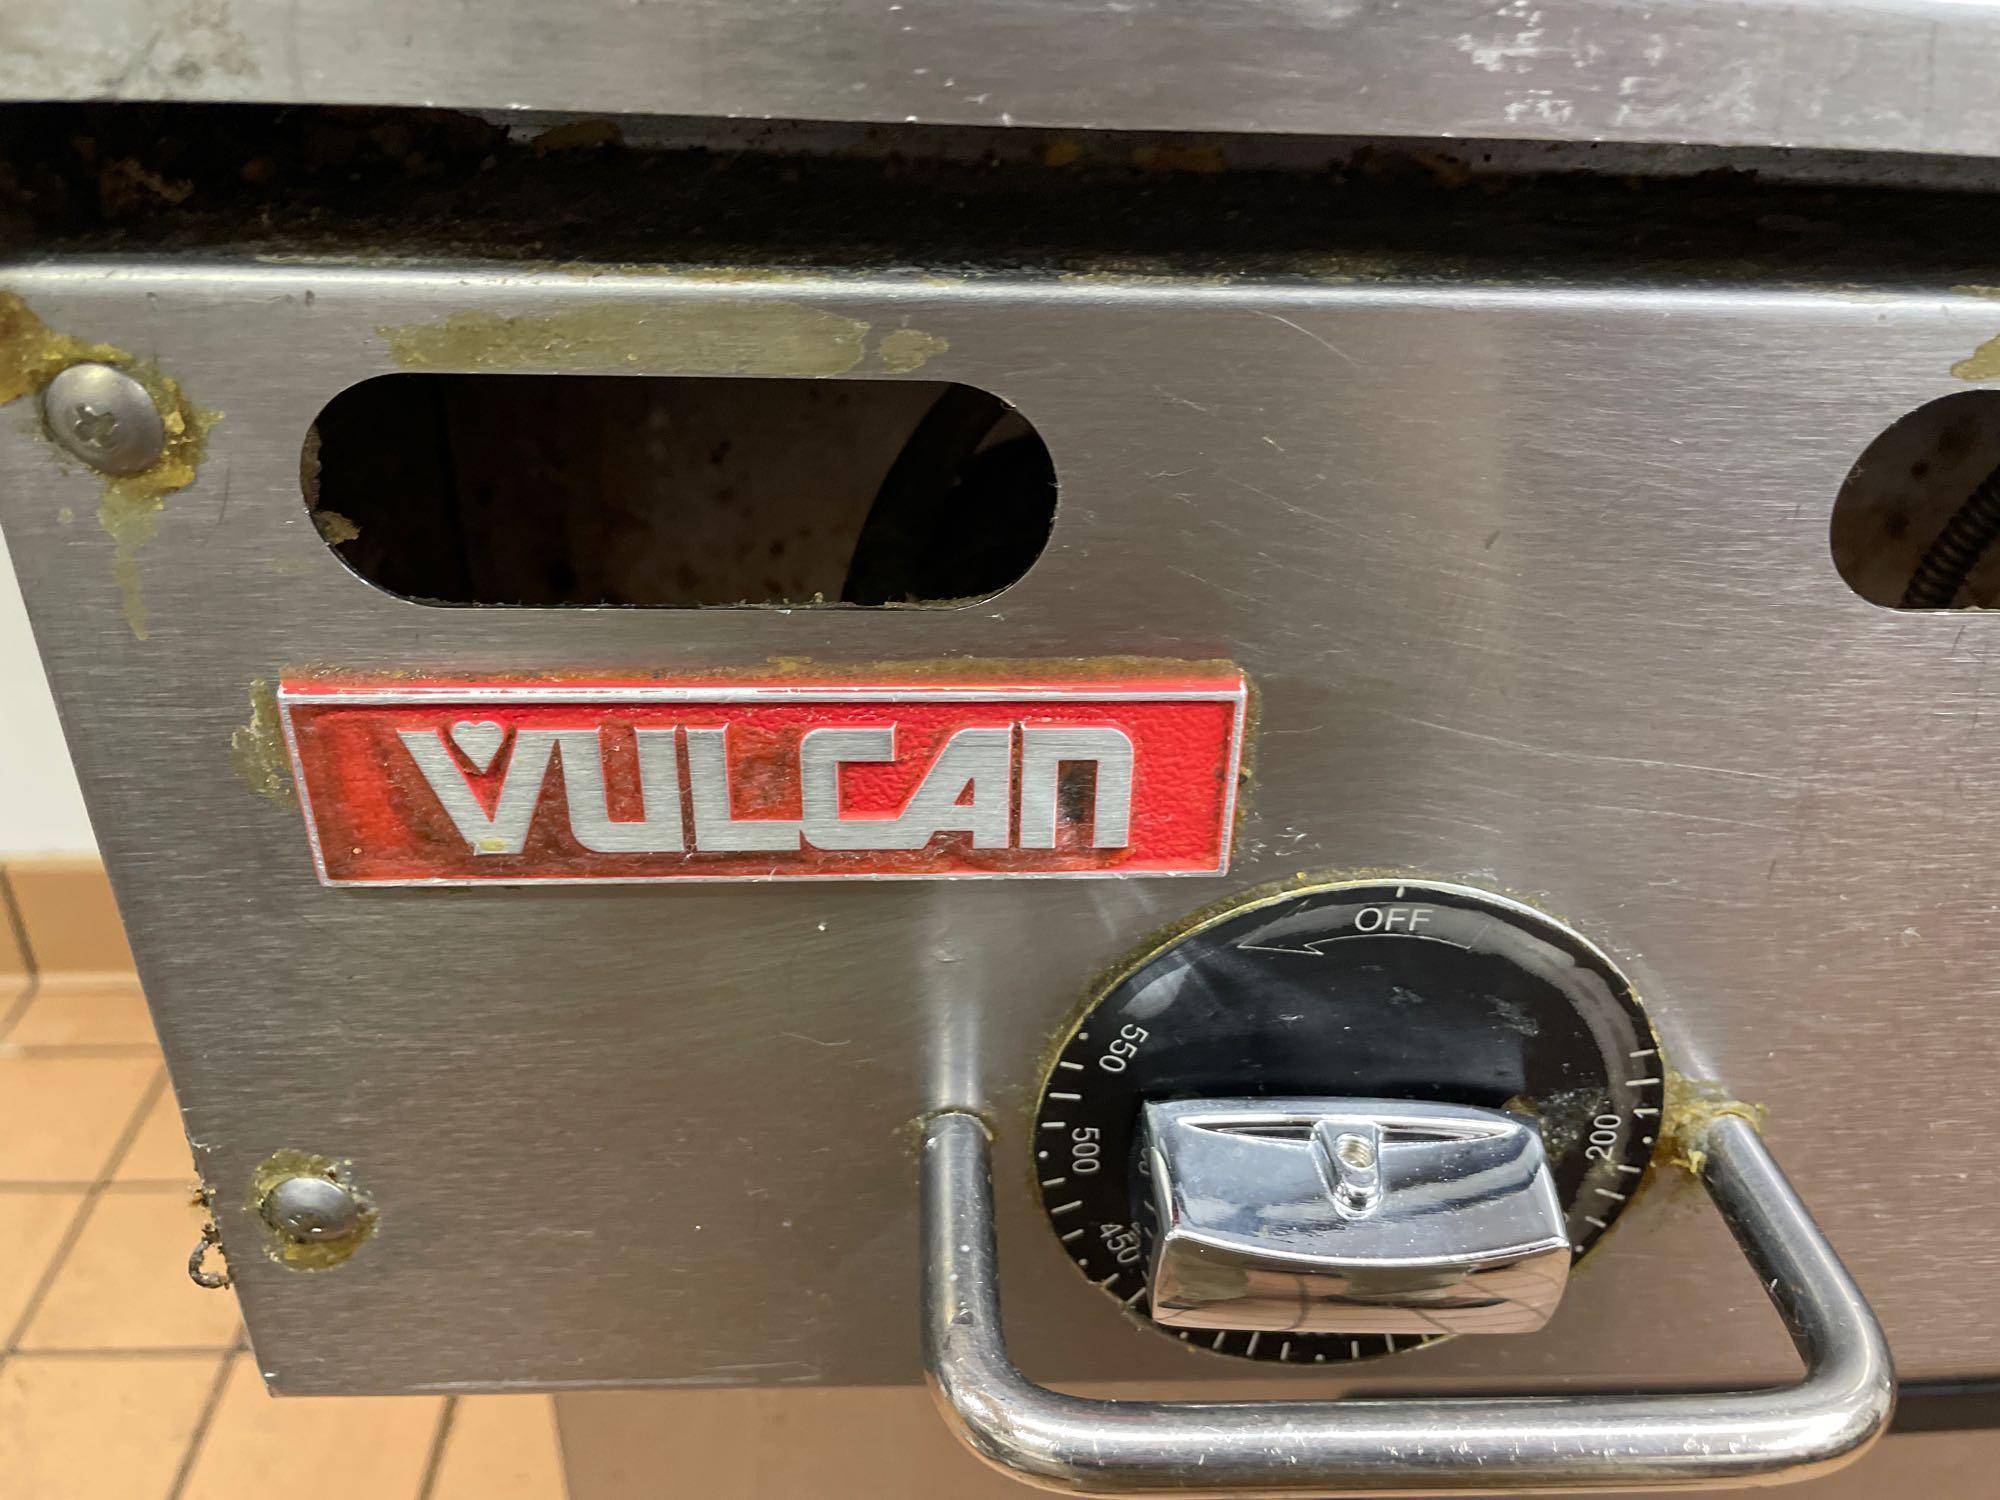 Vulcan Heavy Duty Low Profile Gas Griddle 6' x 2-1/2'